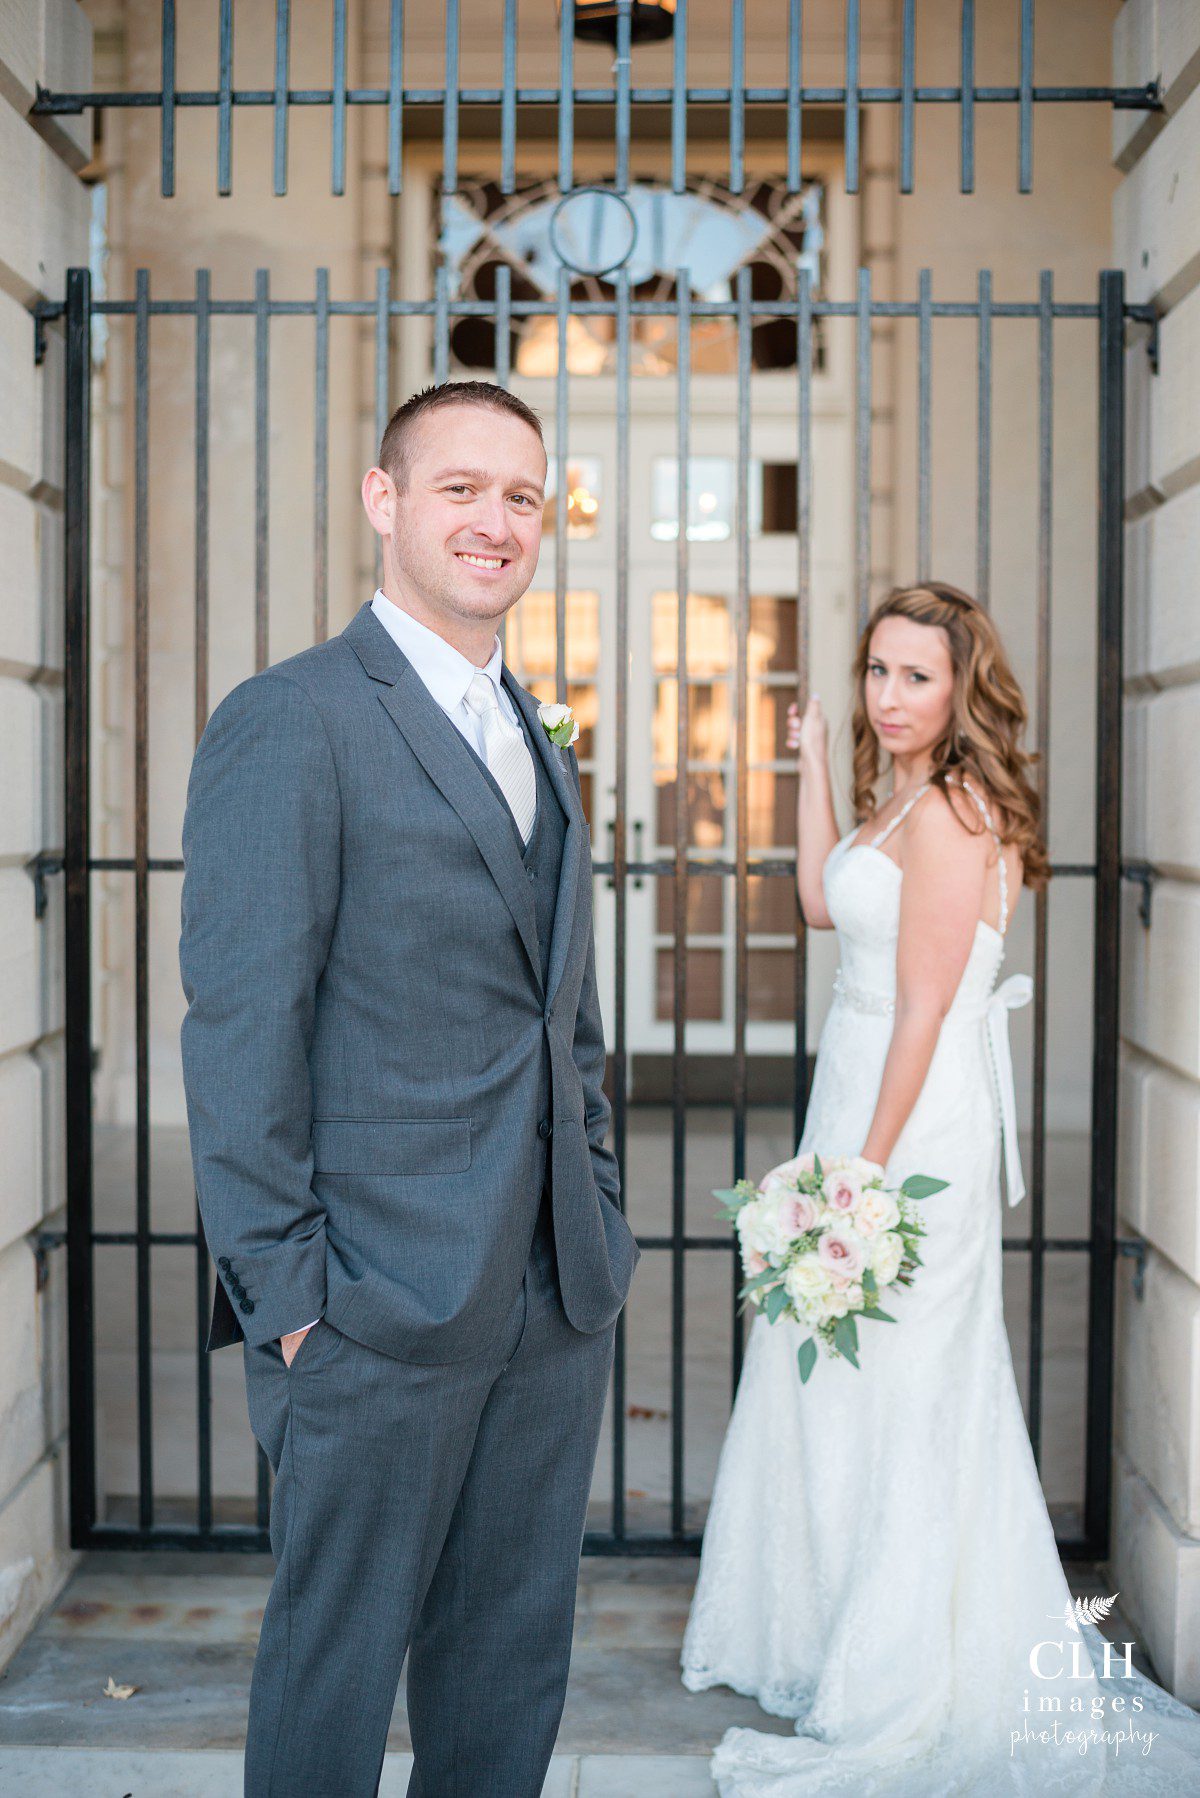 CLH images Photography - Gideon Putnam Wedding Photography - Saratoga Wedding Photographer - Capital District Wedding Photographer - Albany Wedding Photography - Sara and John (68)